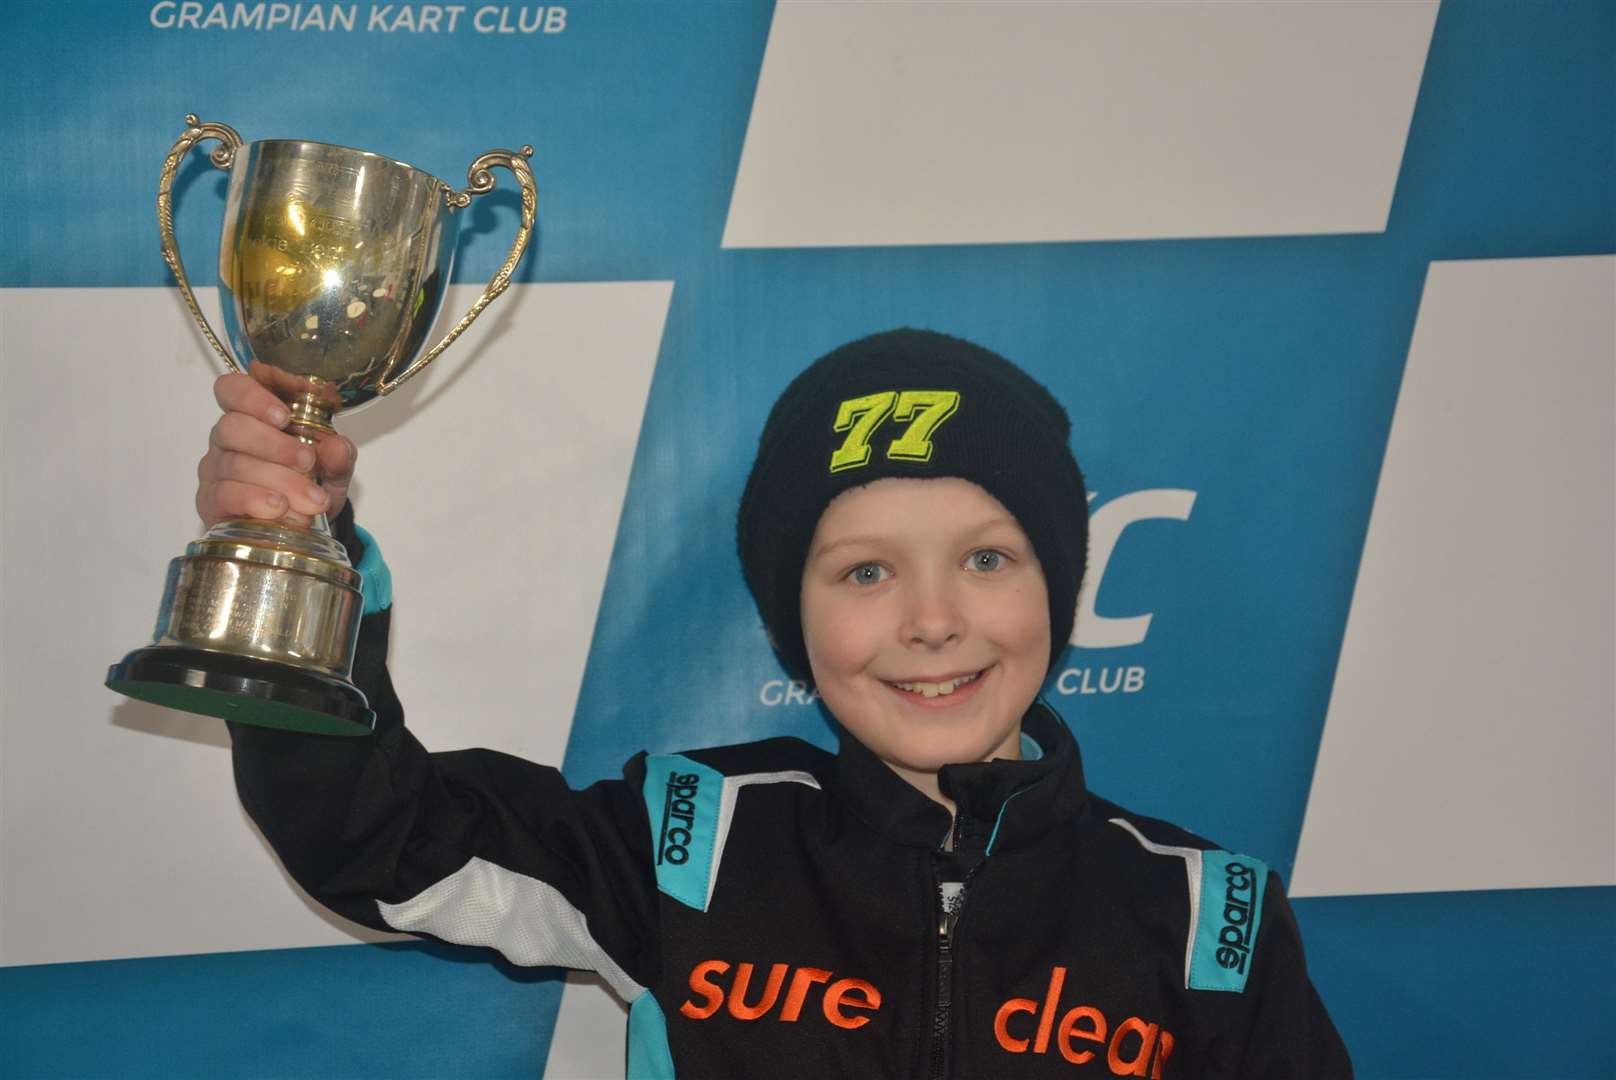 Luca Bicocchi won the first show trophy of the kart club season at Boyndie.